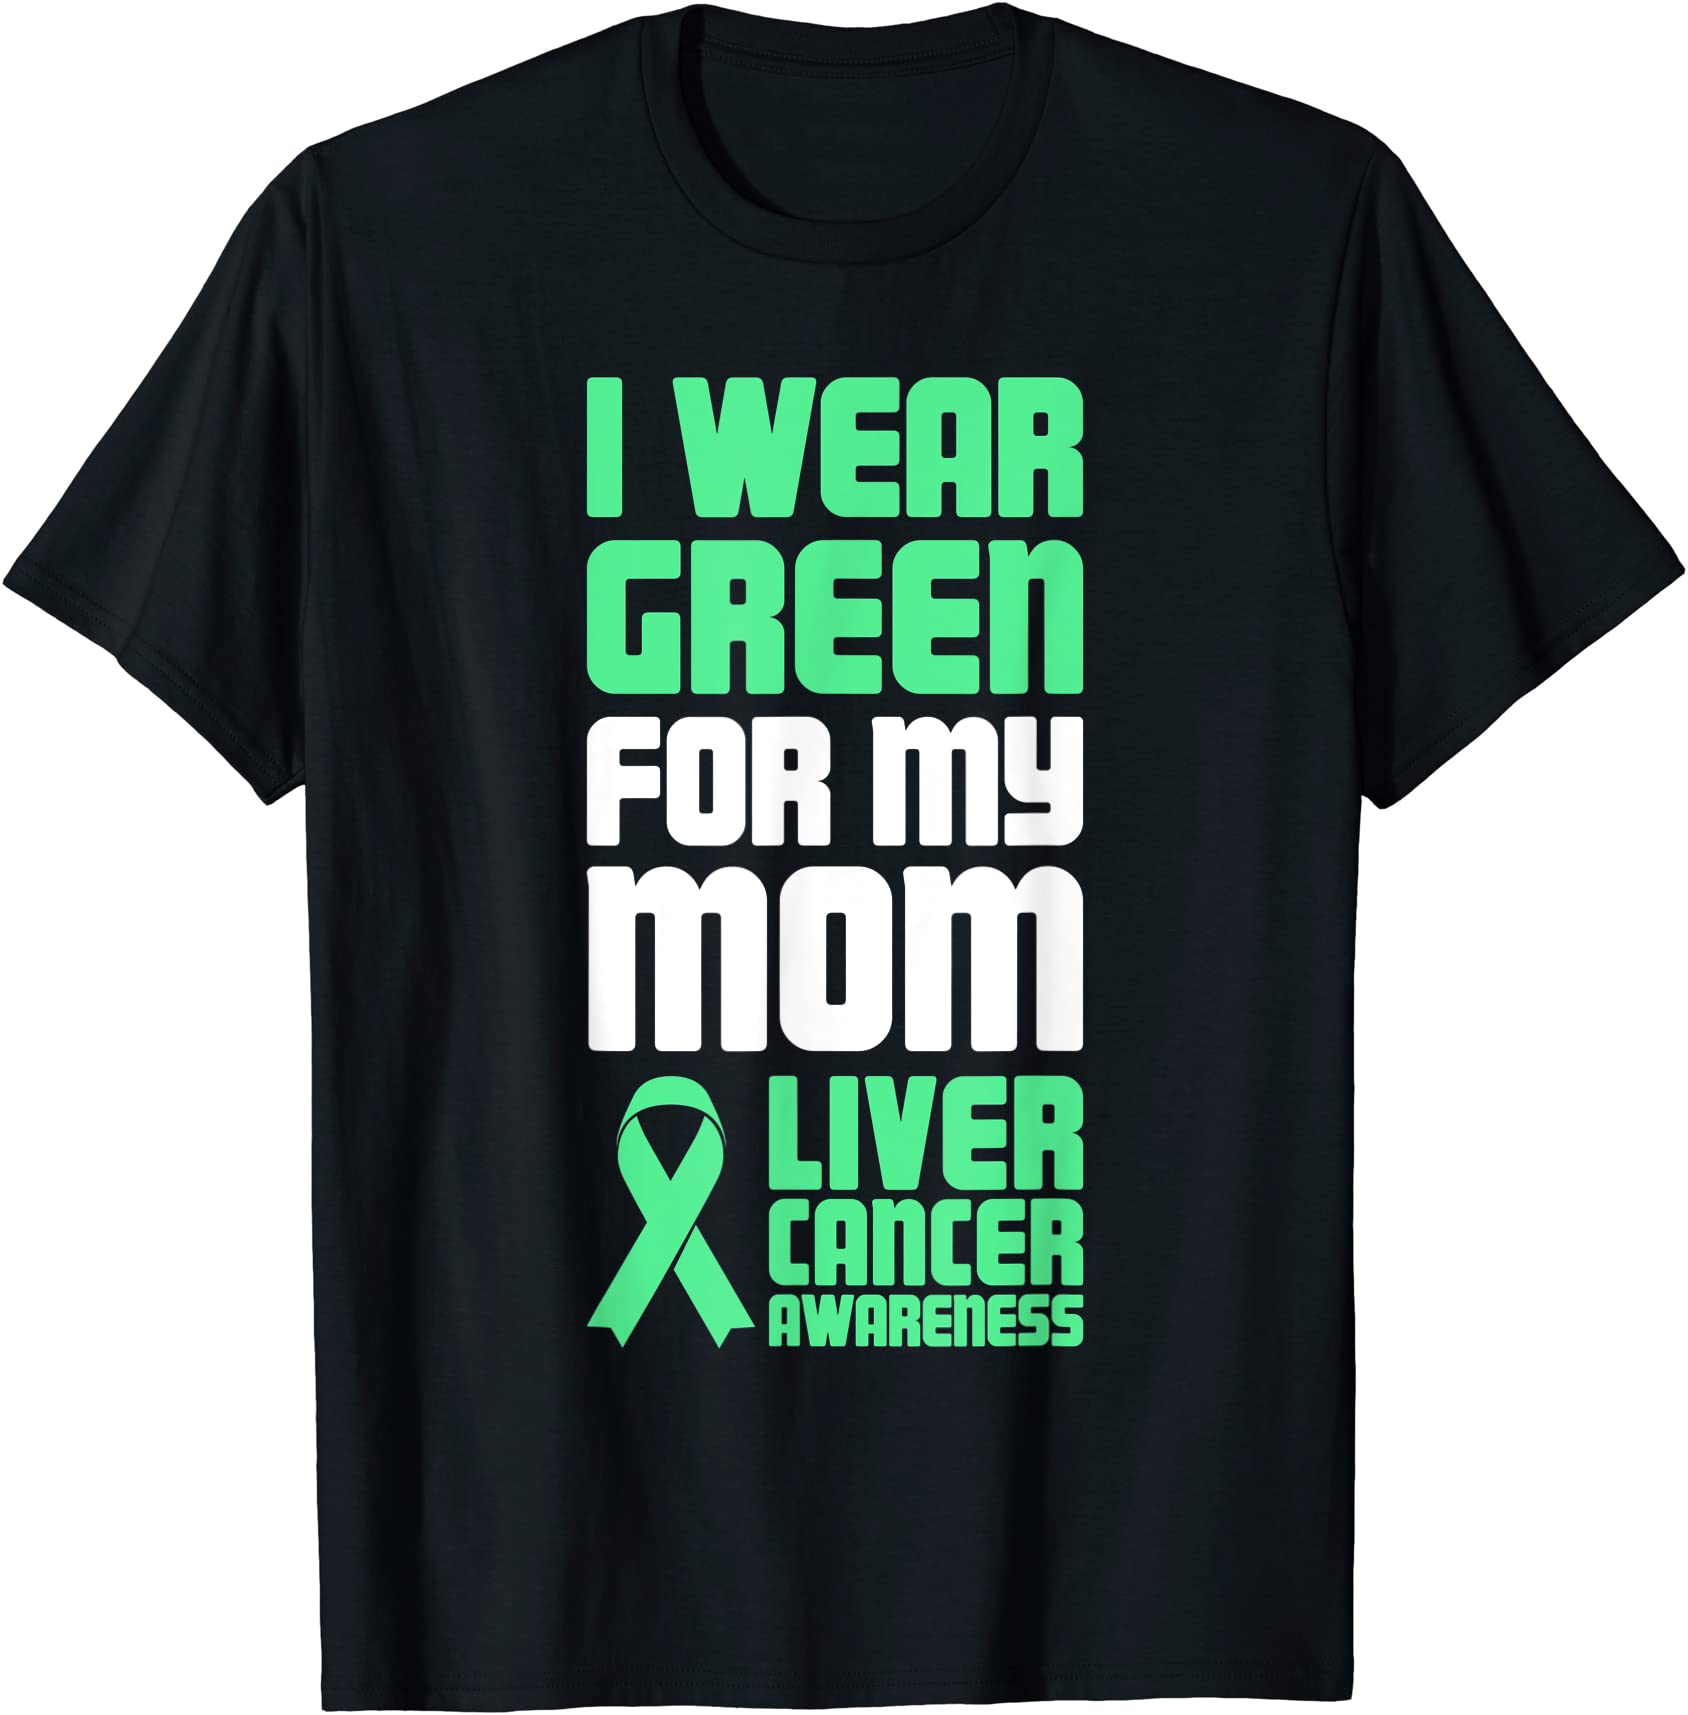 mom hepatic awareness present liver cancer t shirt men - Buy t-shirt ...